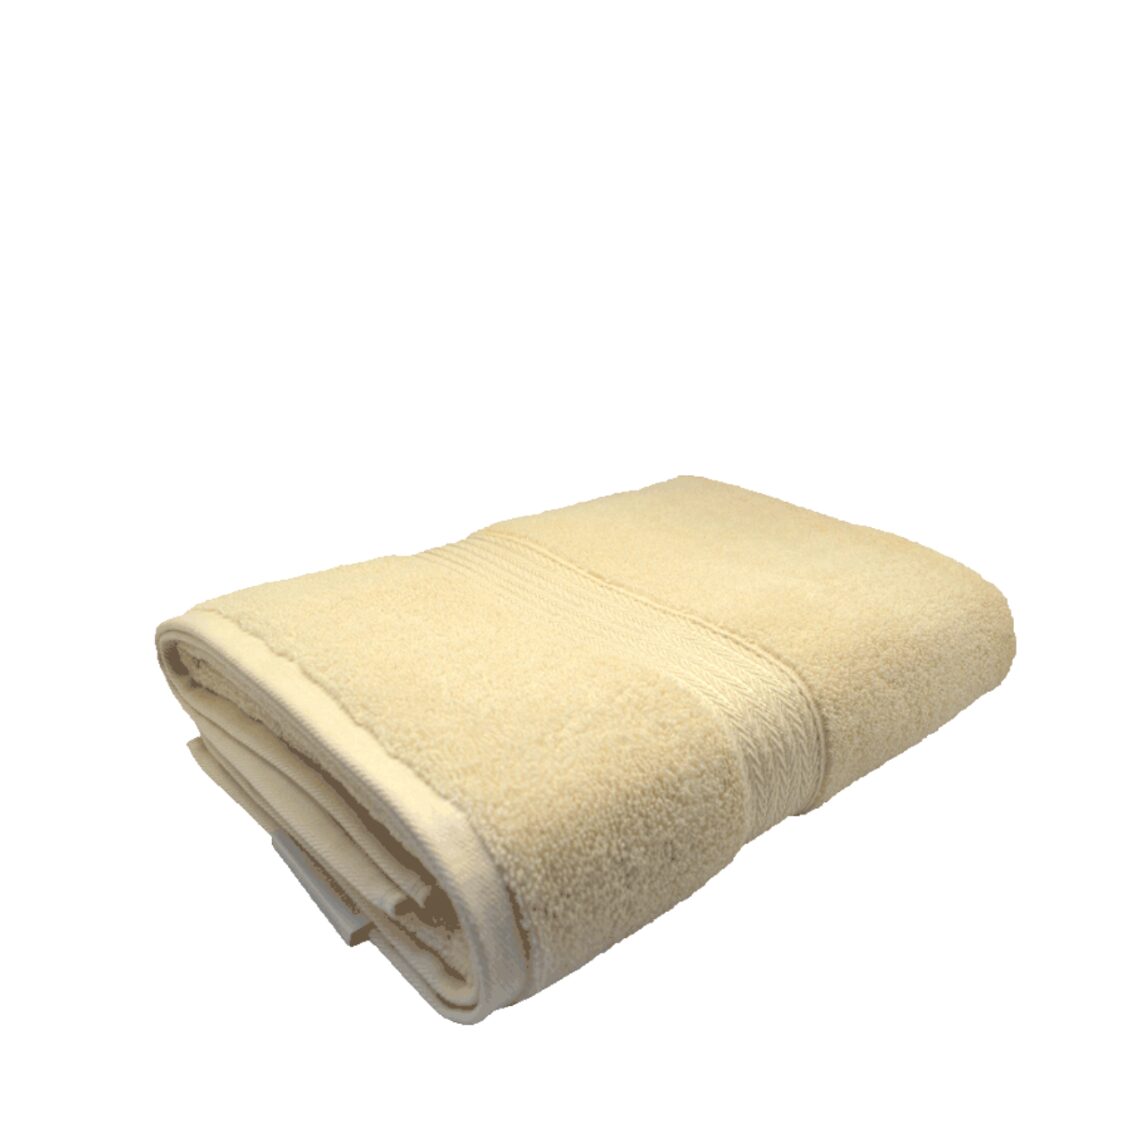 Charles Millen Suite Collection Finsbury Bath Towel 76X137cm Ivory Coast Set Of 2